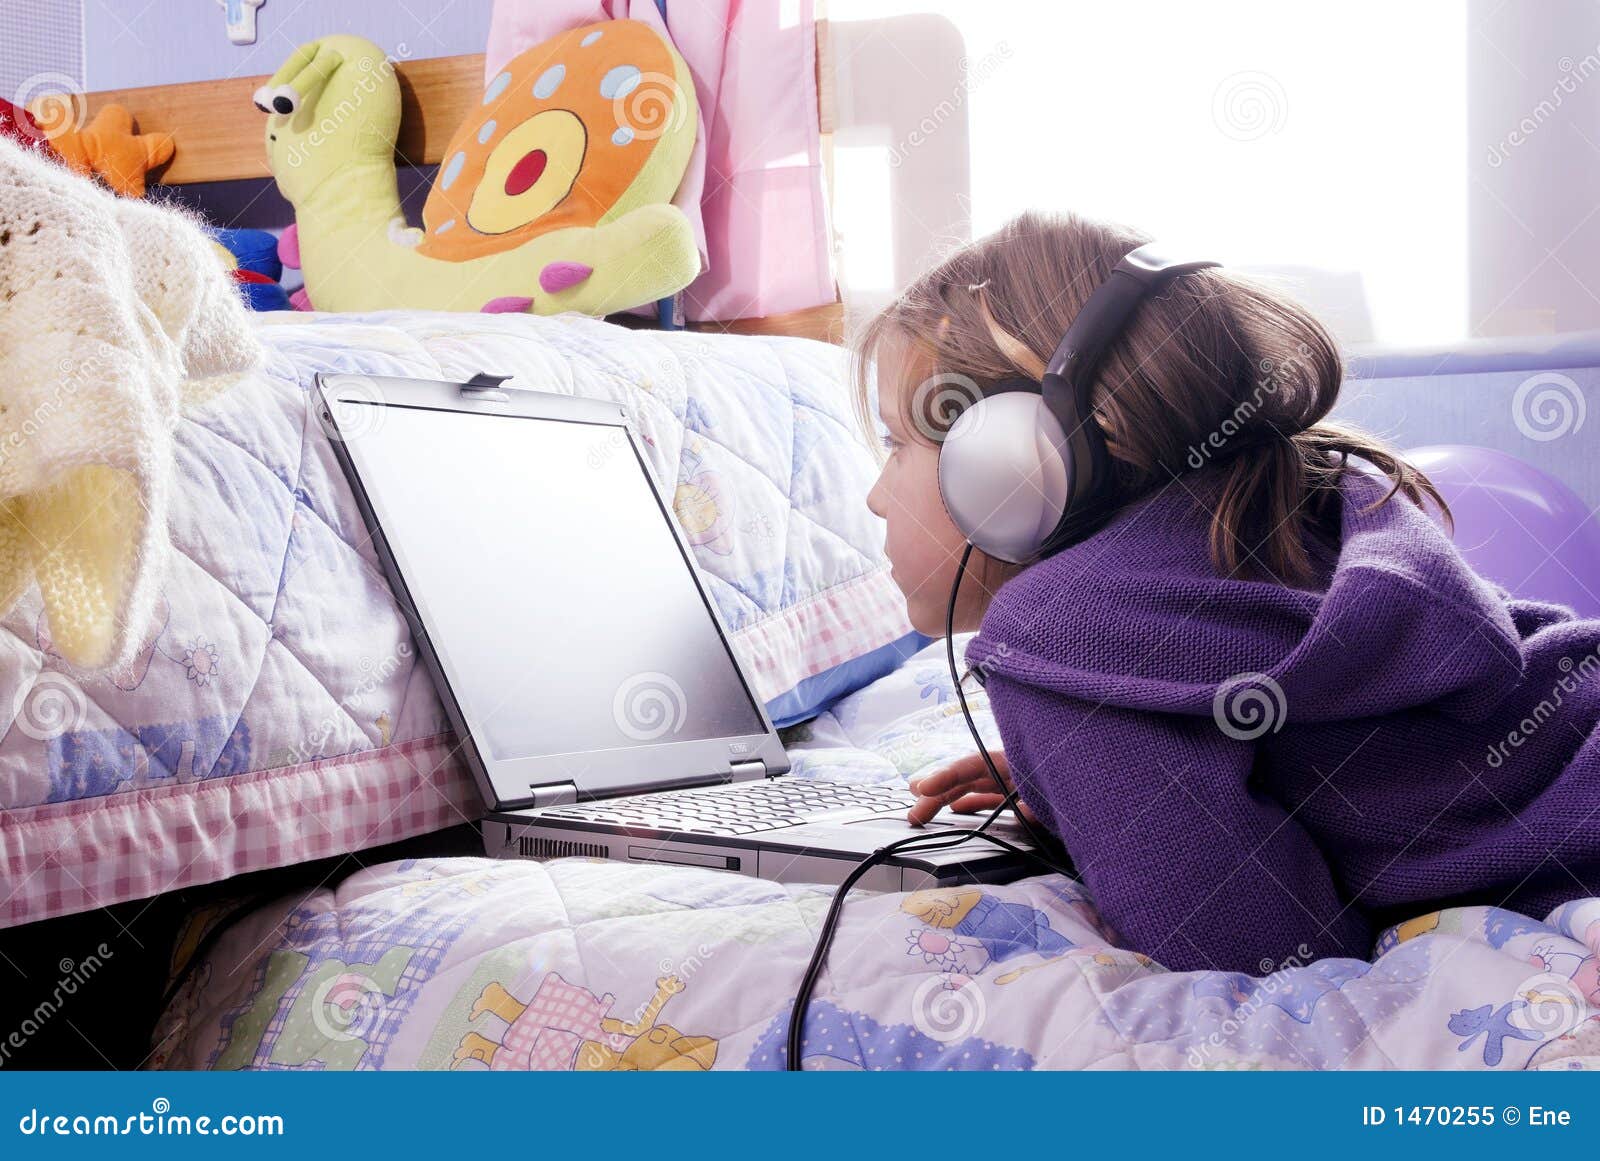 small girl and computer